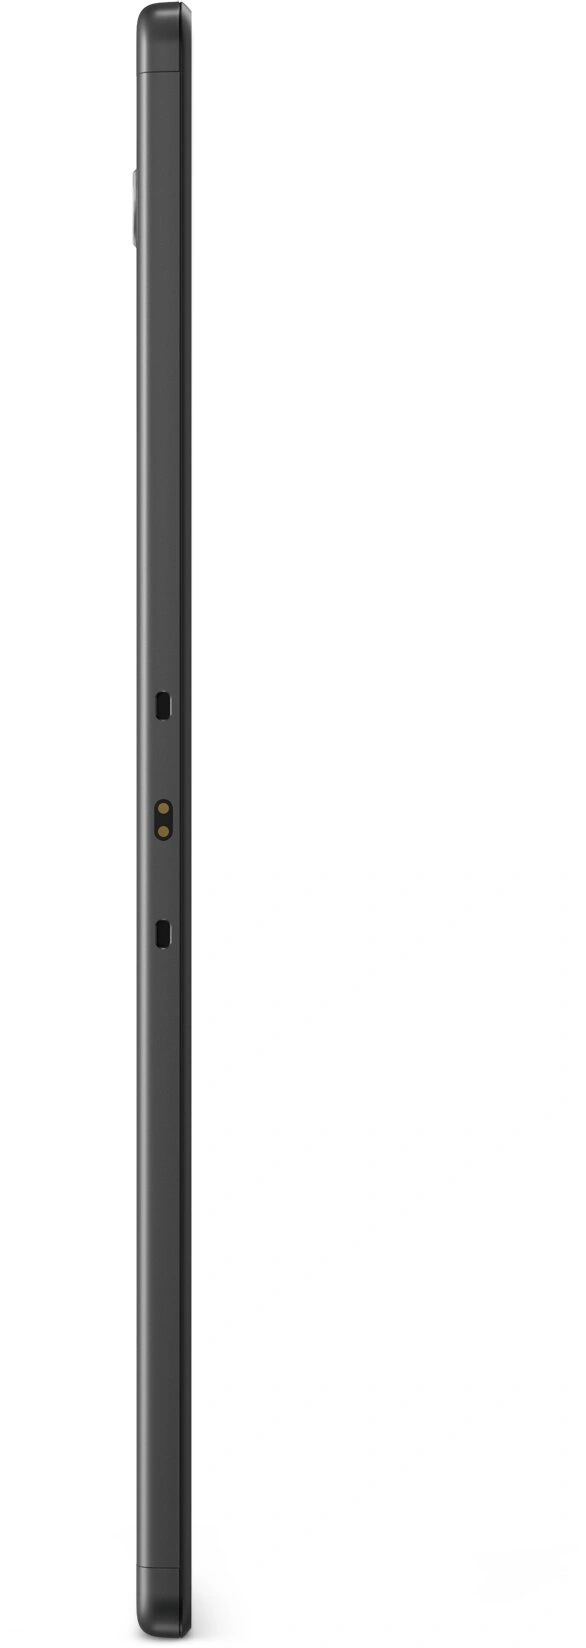 Lenovo M10 2nd Gen, 4GB/64GB, LTE